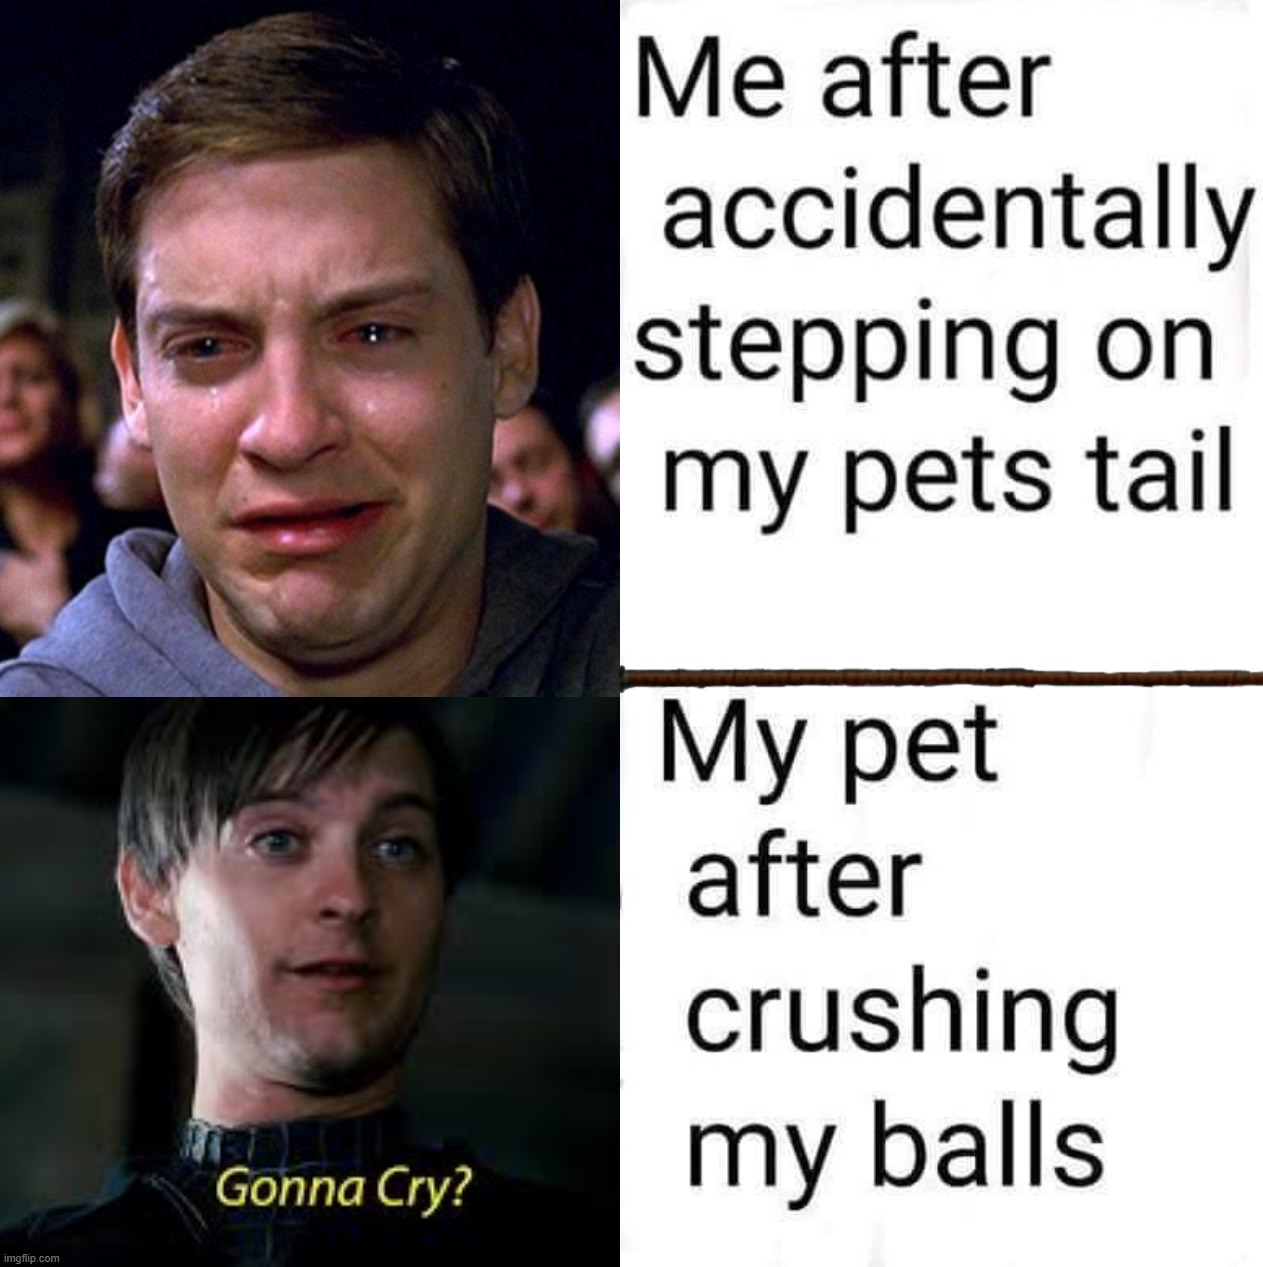 peter parker crying meme